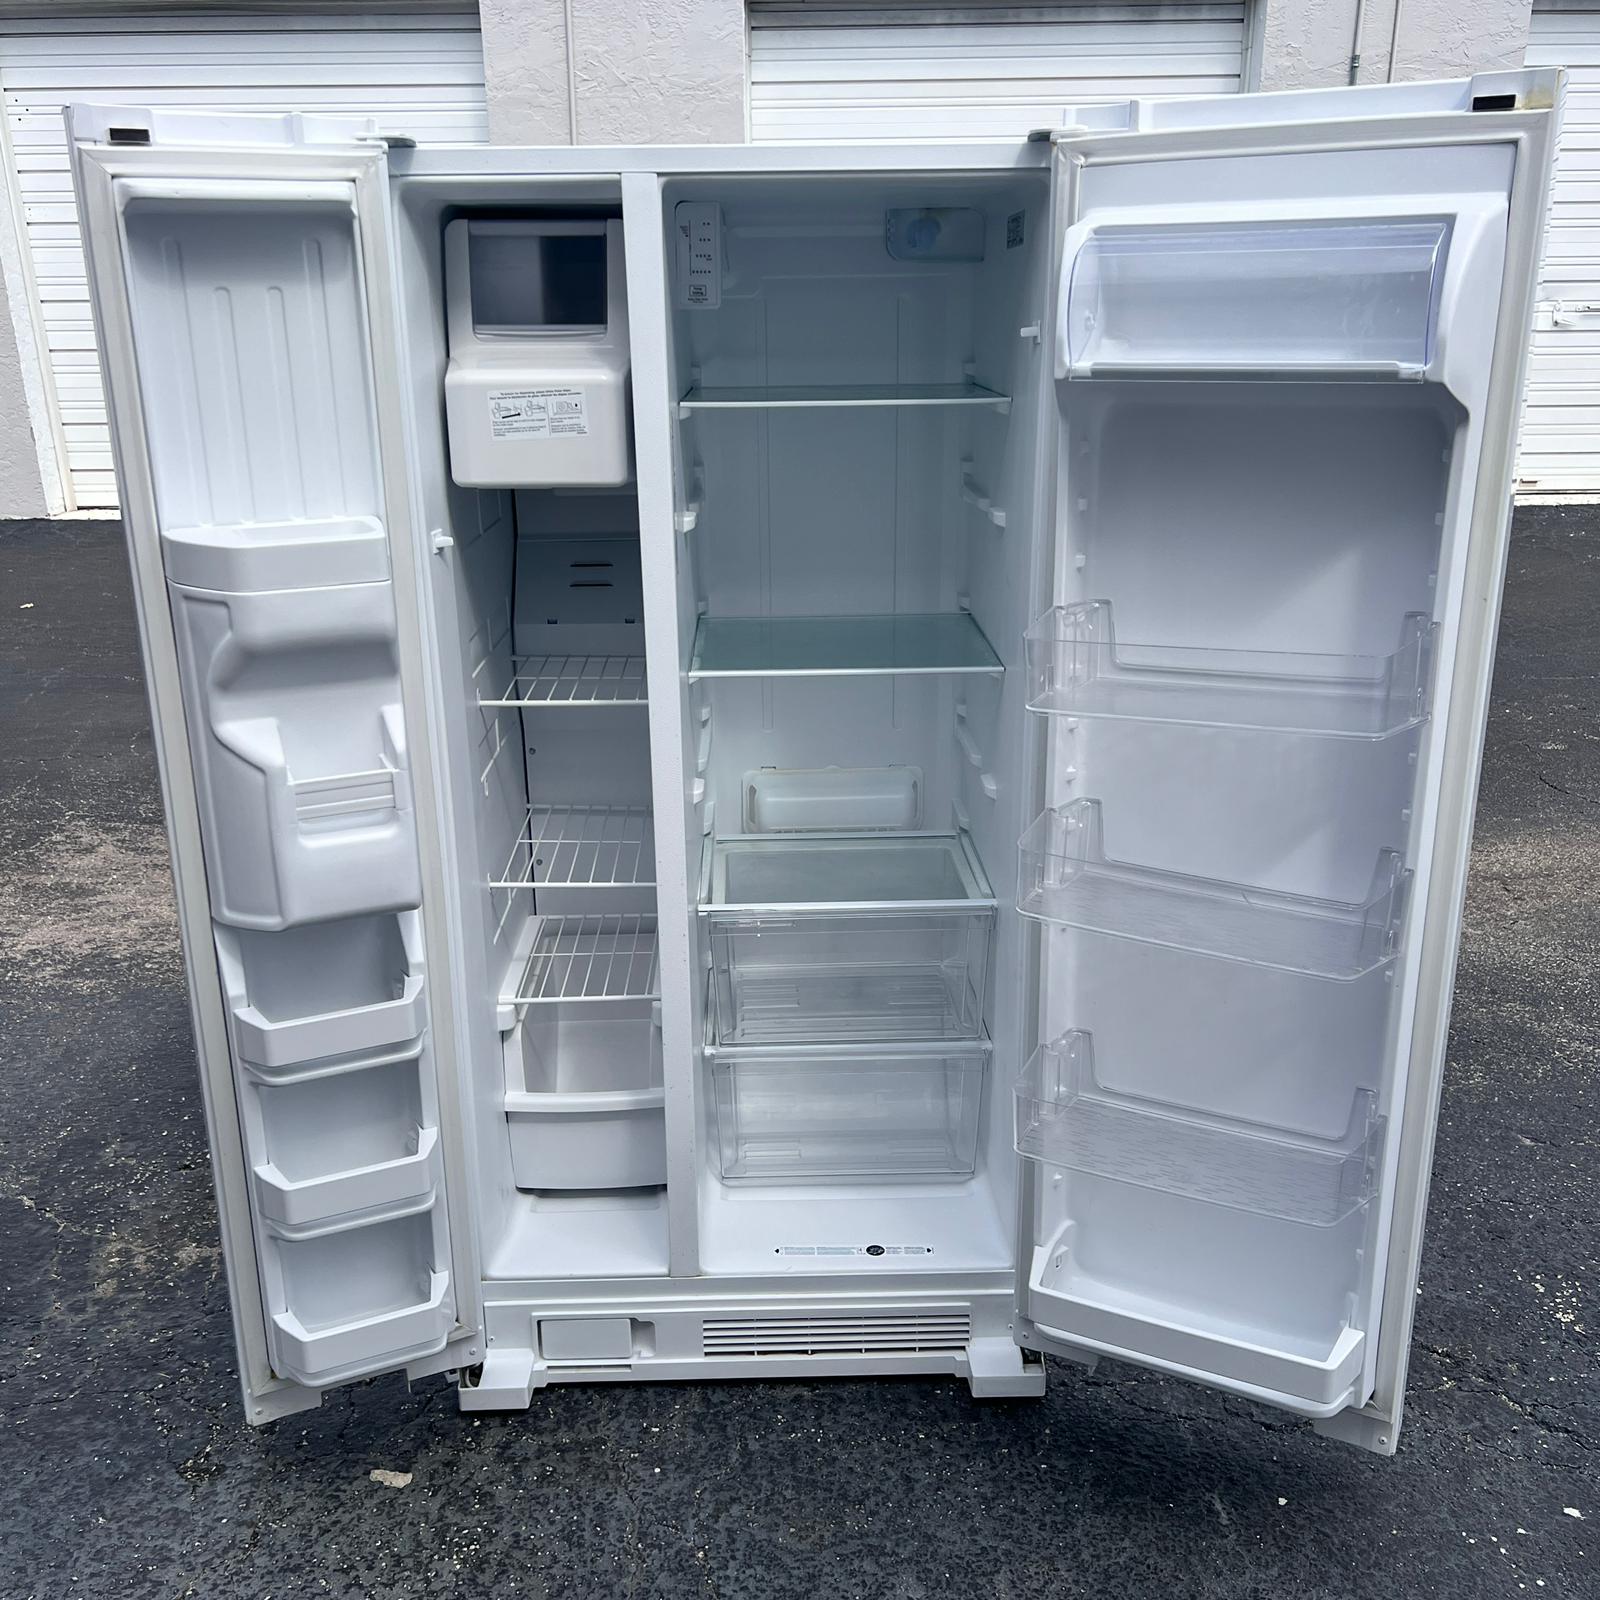 Amana Side by Side Refrigerator